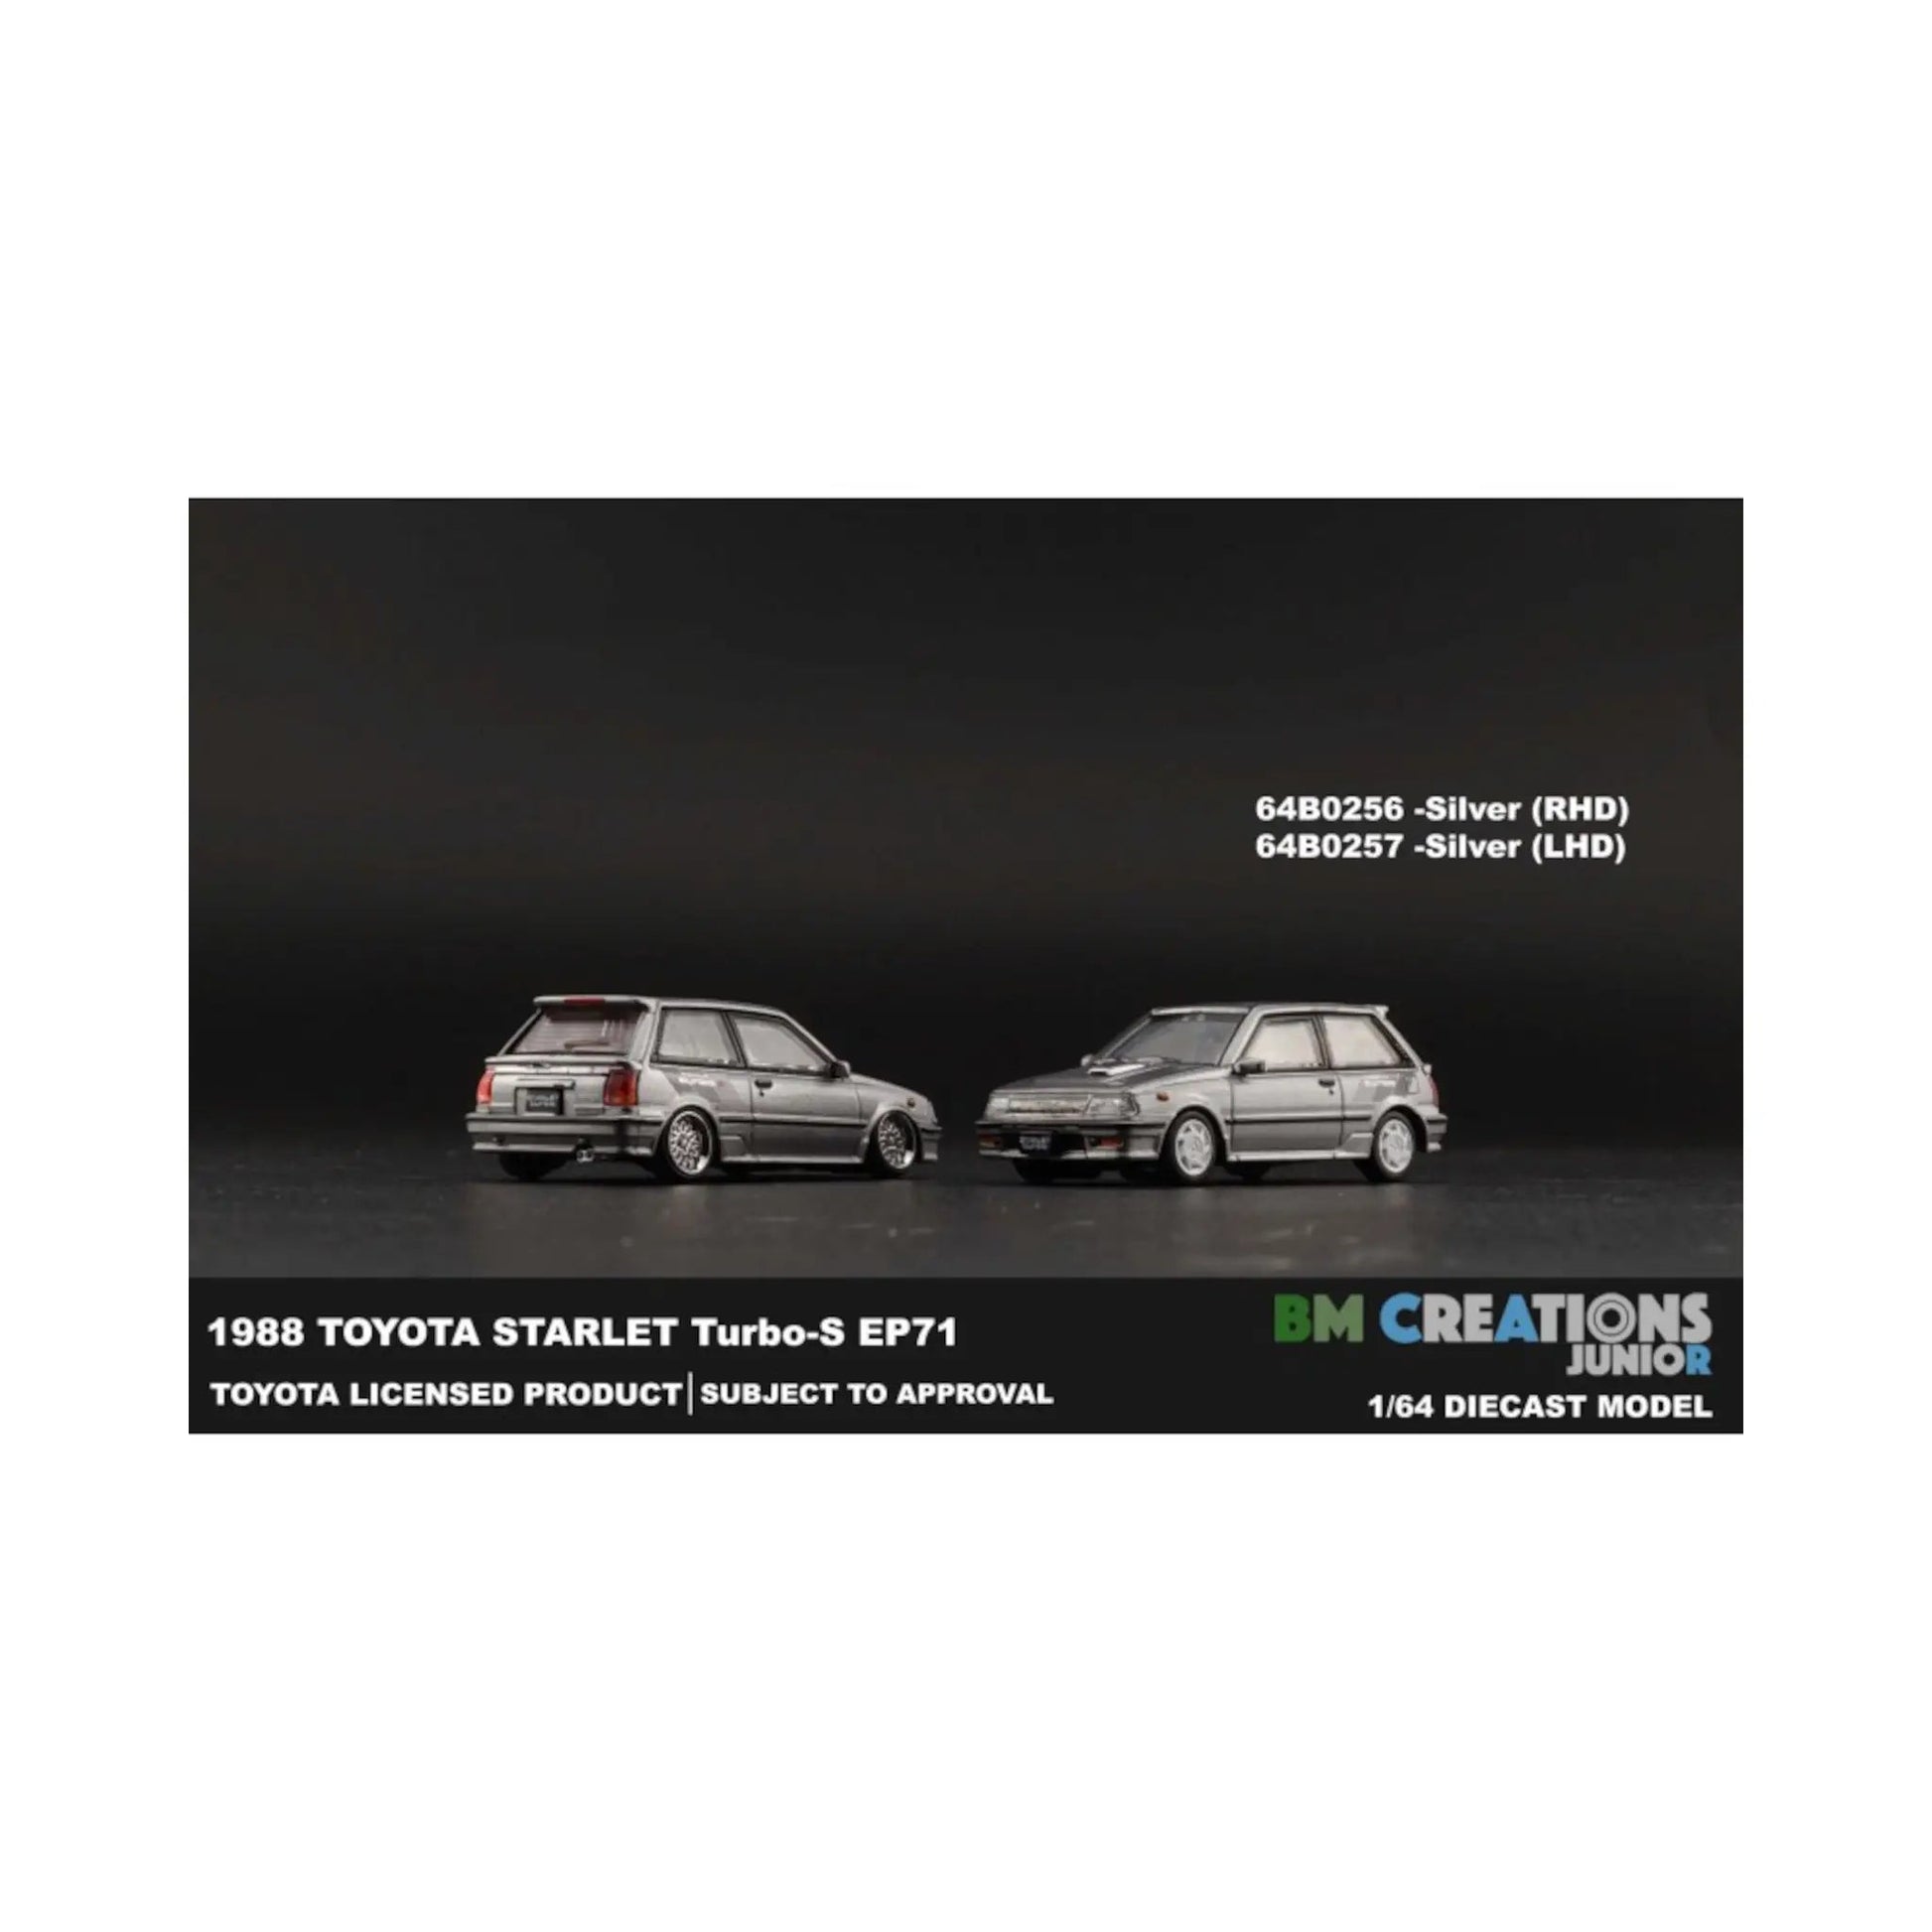 Toyota Starlet Turbo S EP71 1988 silver LHD BM Creations 1/64 - BM64B0257lhd